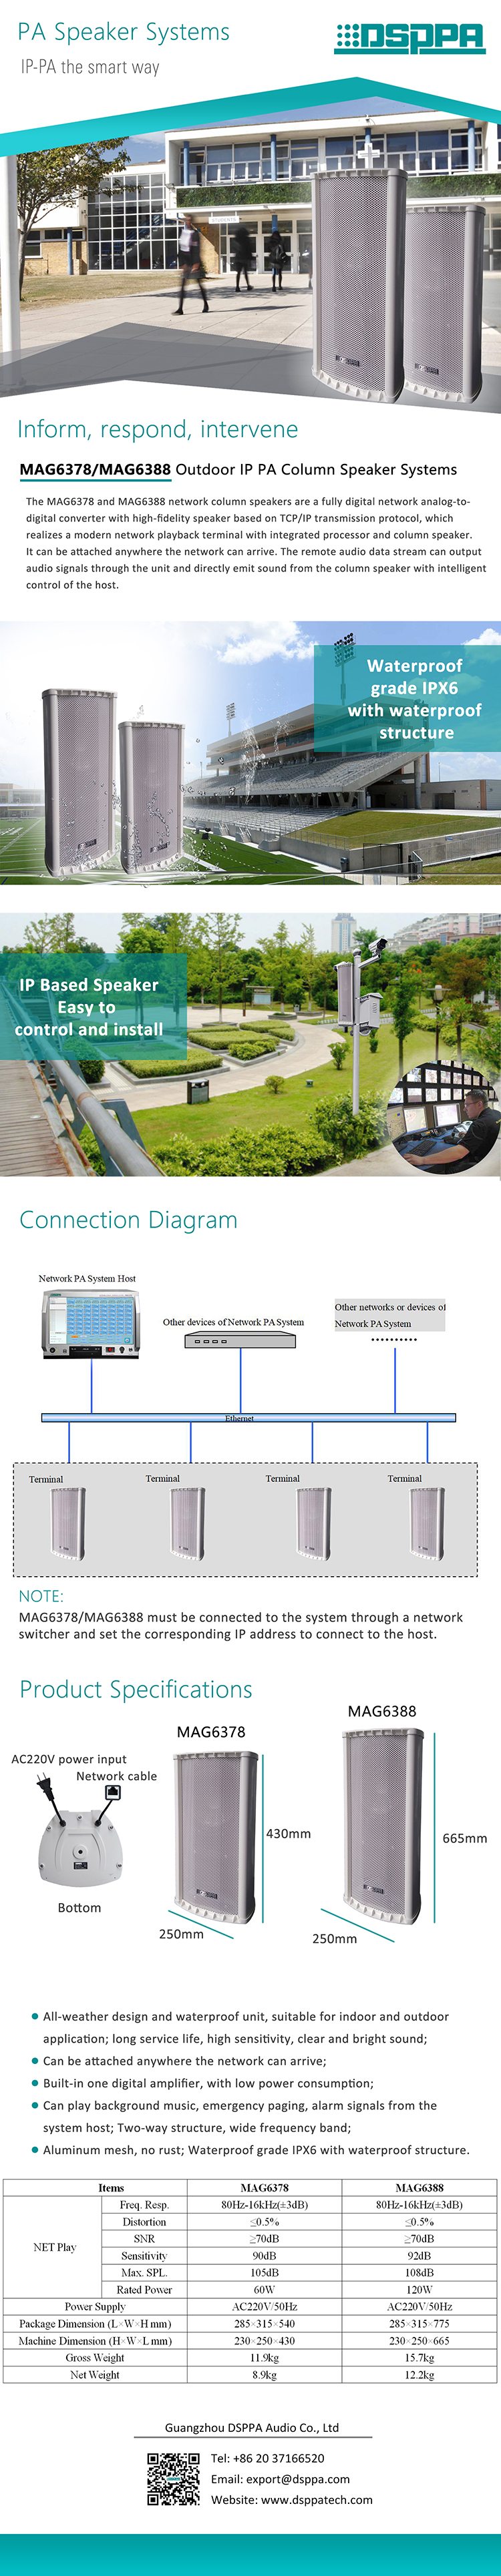 MAG6378 Outdoor IP PA Column Installation Speaker System 60W